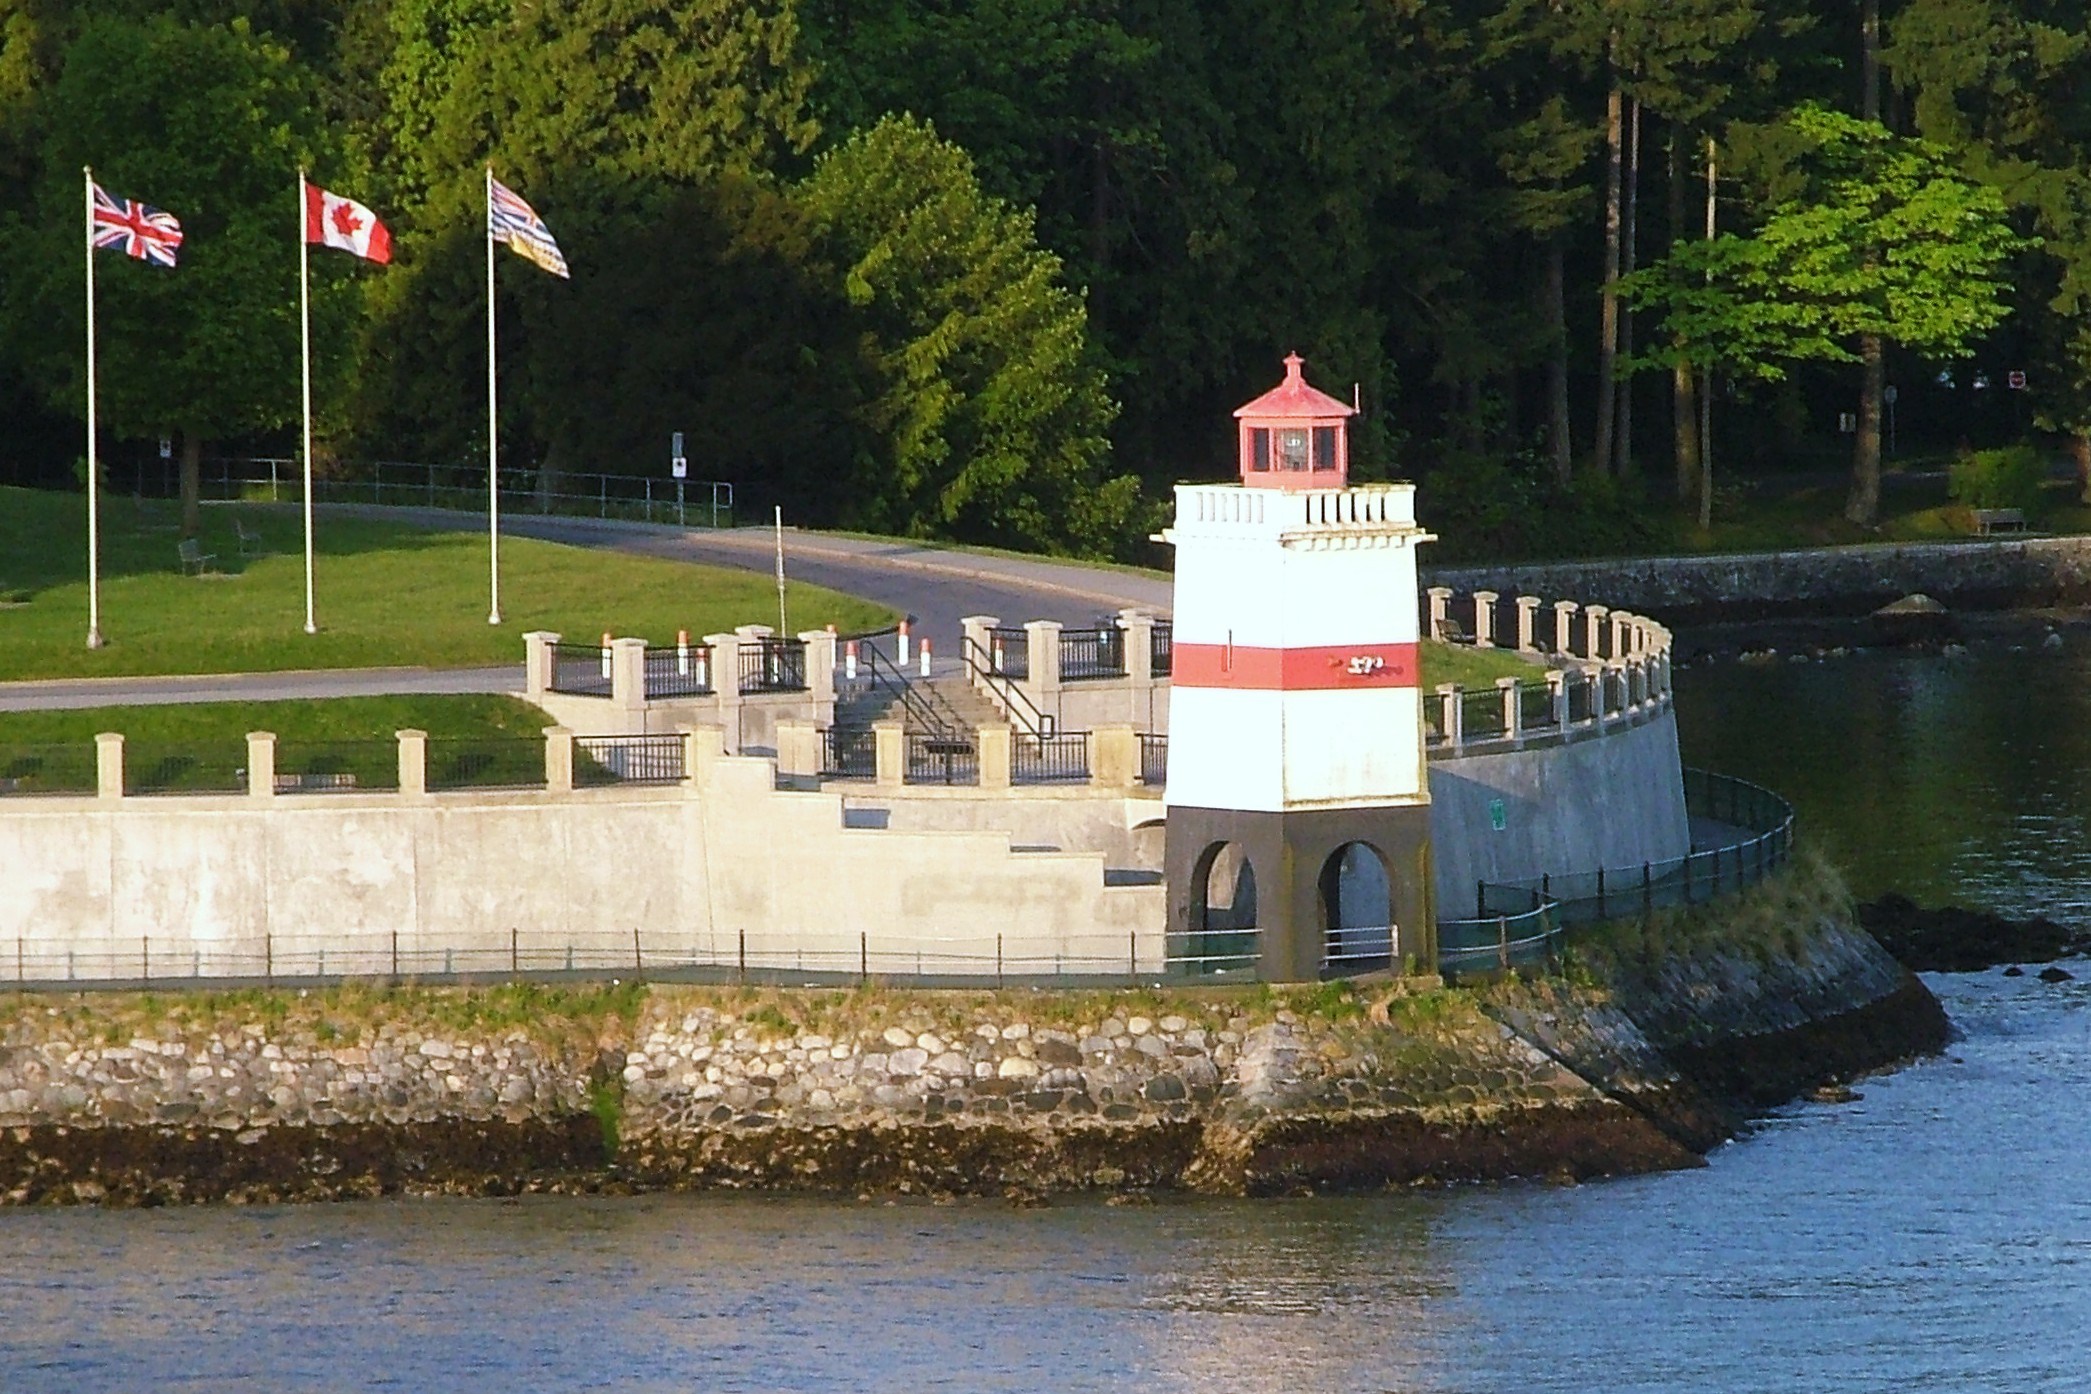 British Columbia / Vancouver / Brockton Point Lighthouse
Source: [url=http://bitstop.squarespace.com]Bit Stop[/url]
Keywords: Vancouver;Canada;British Columbia